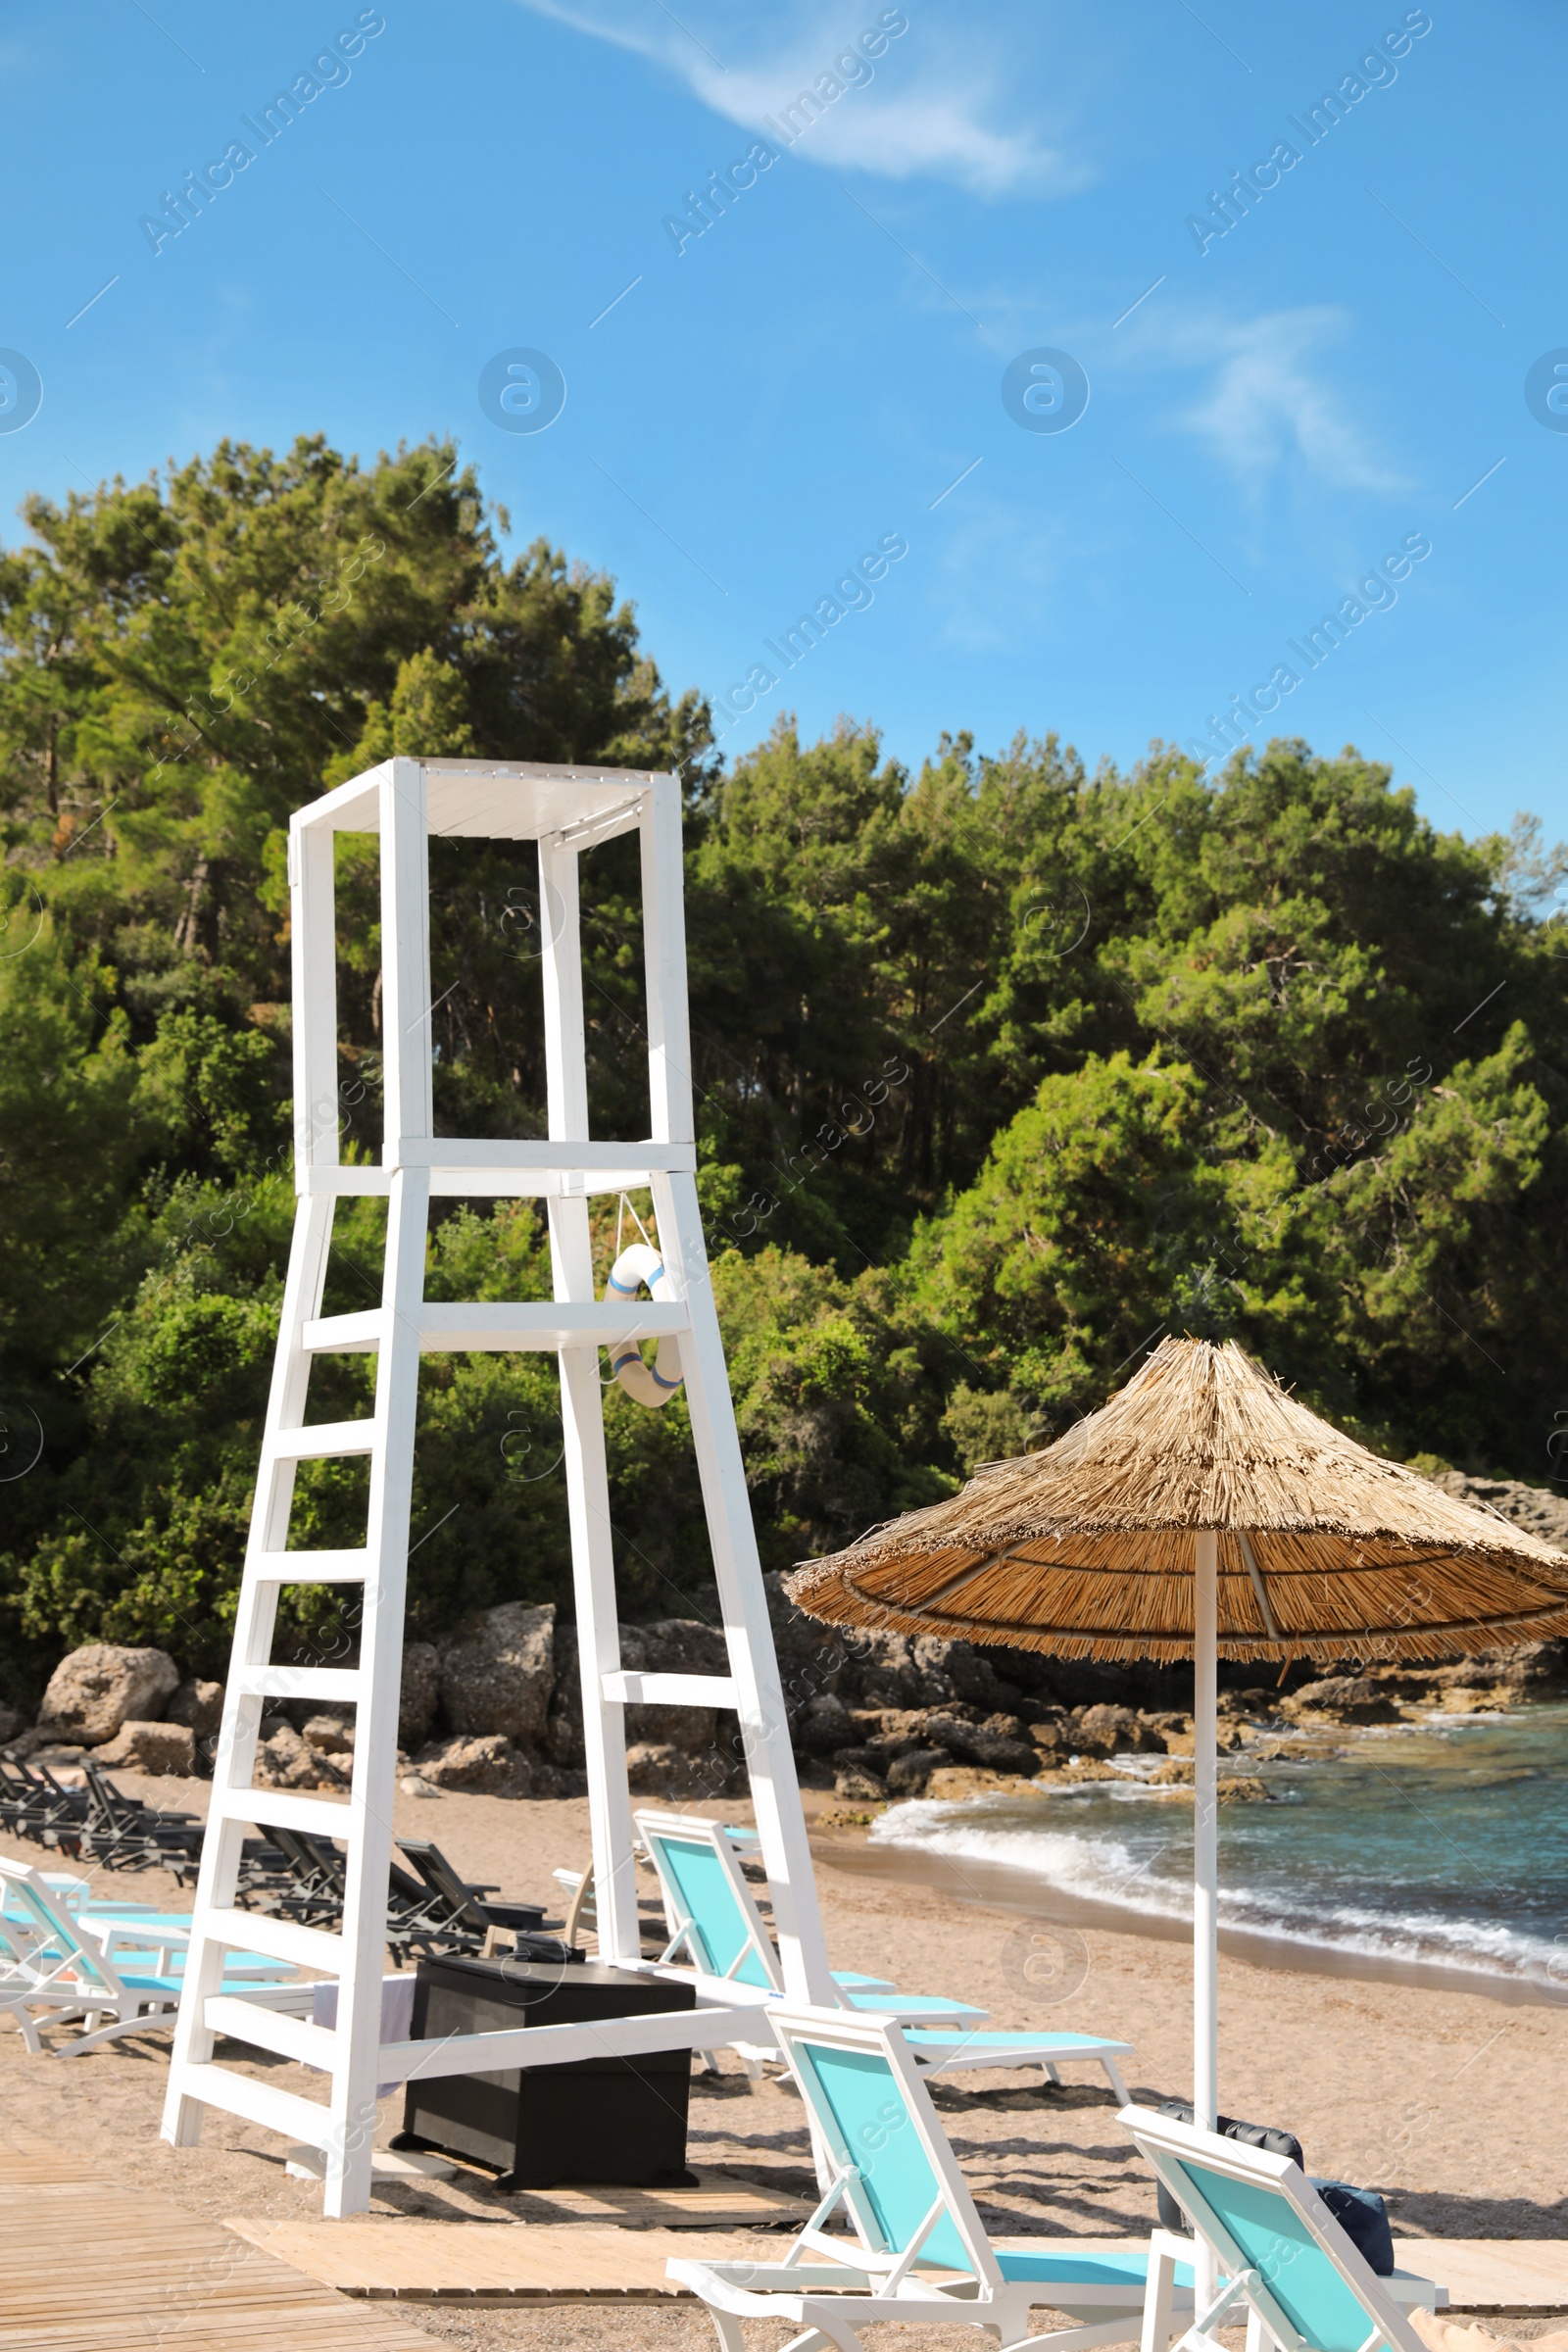 Photo of Lifeguard tower among loungers on sea beach